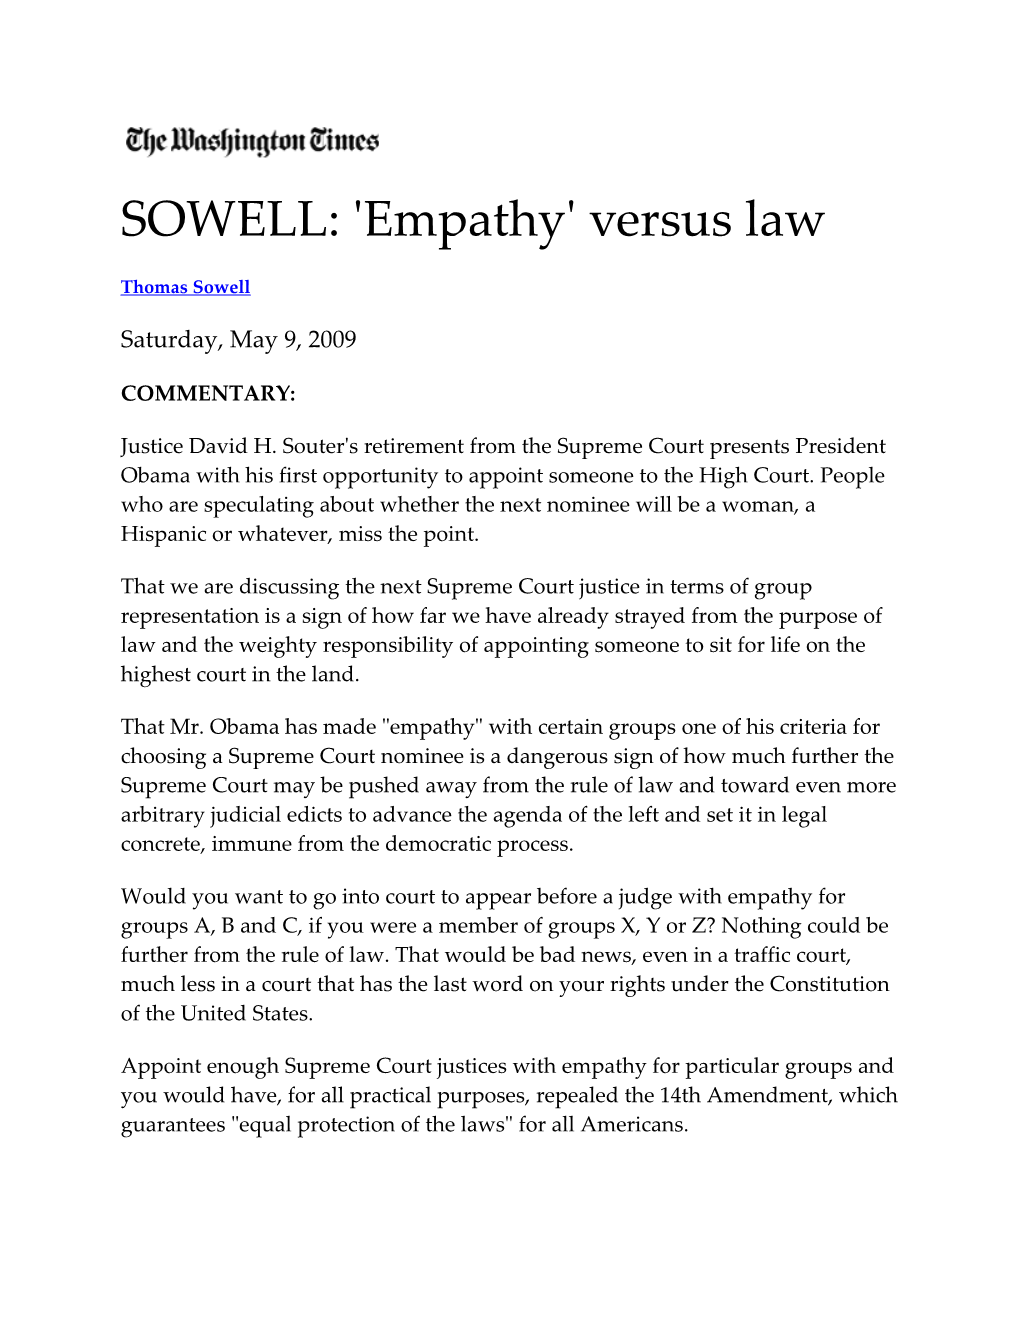 SOWELL: 'Empathy' Versus Law